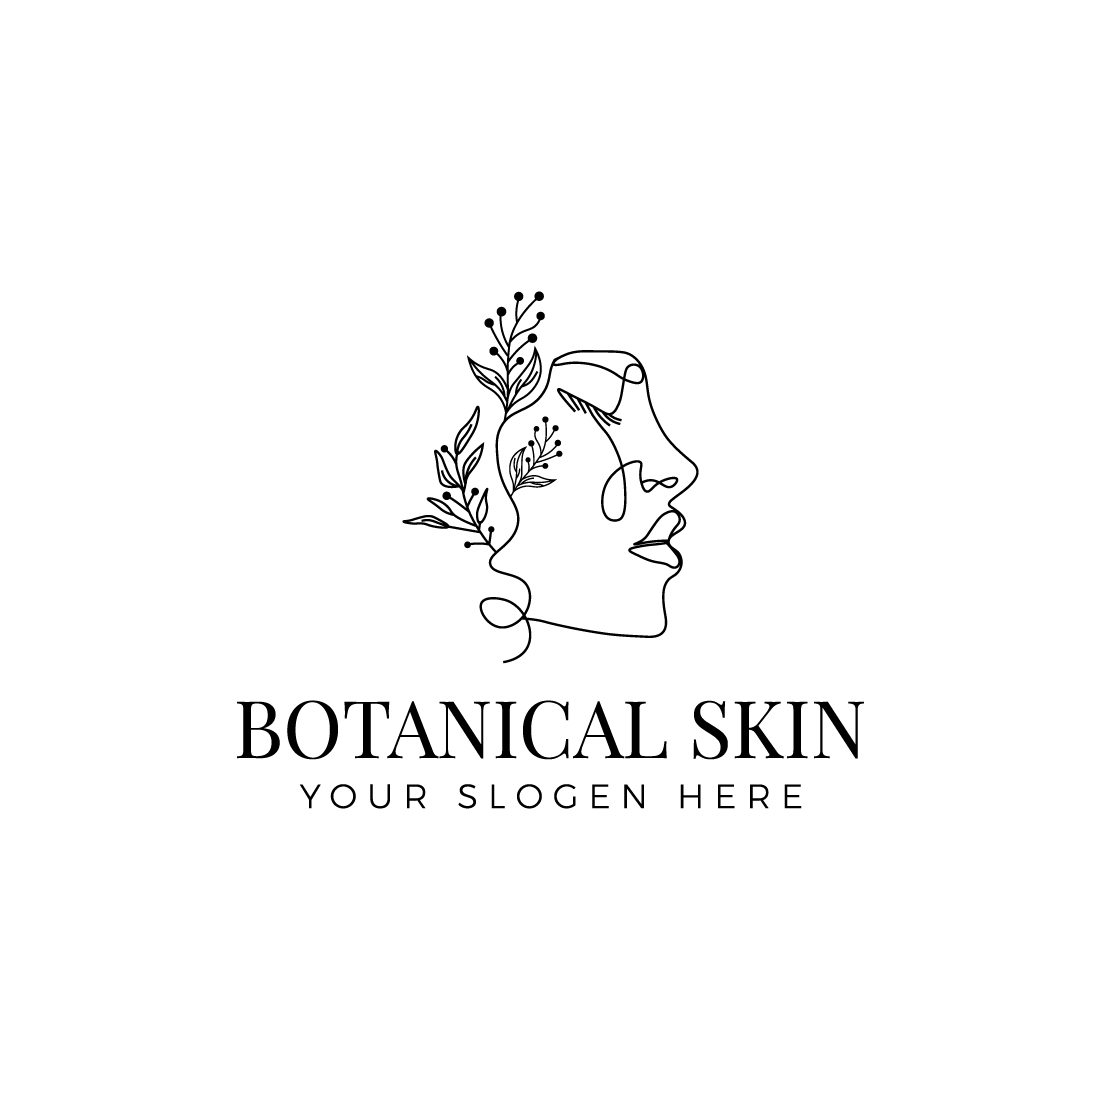 Botanical logo minimalism template Royalty Free Vector Image